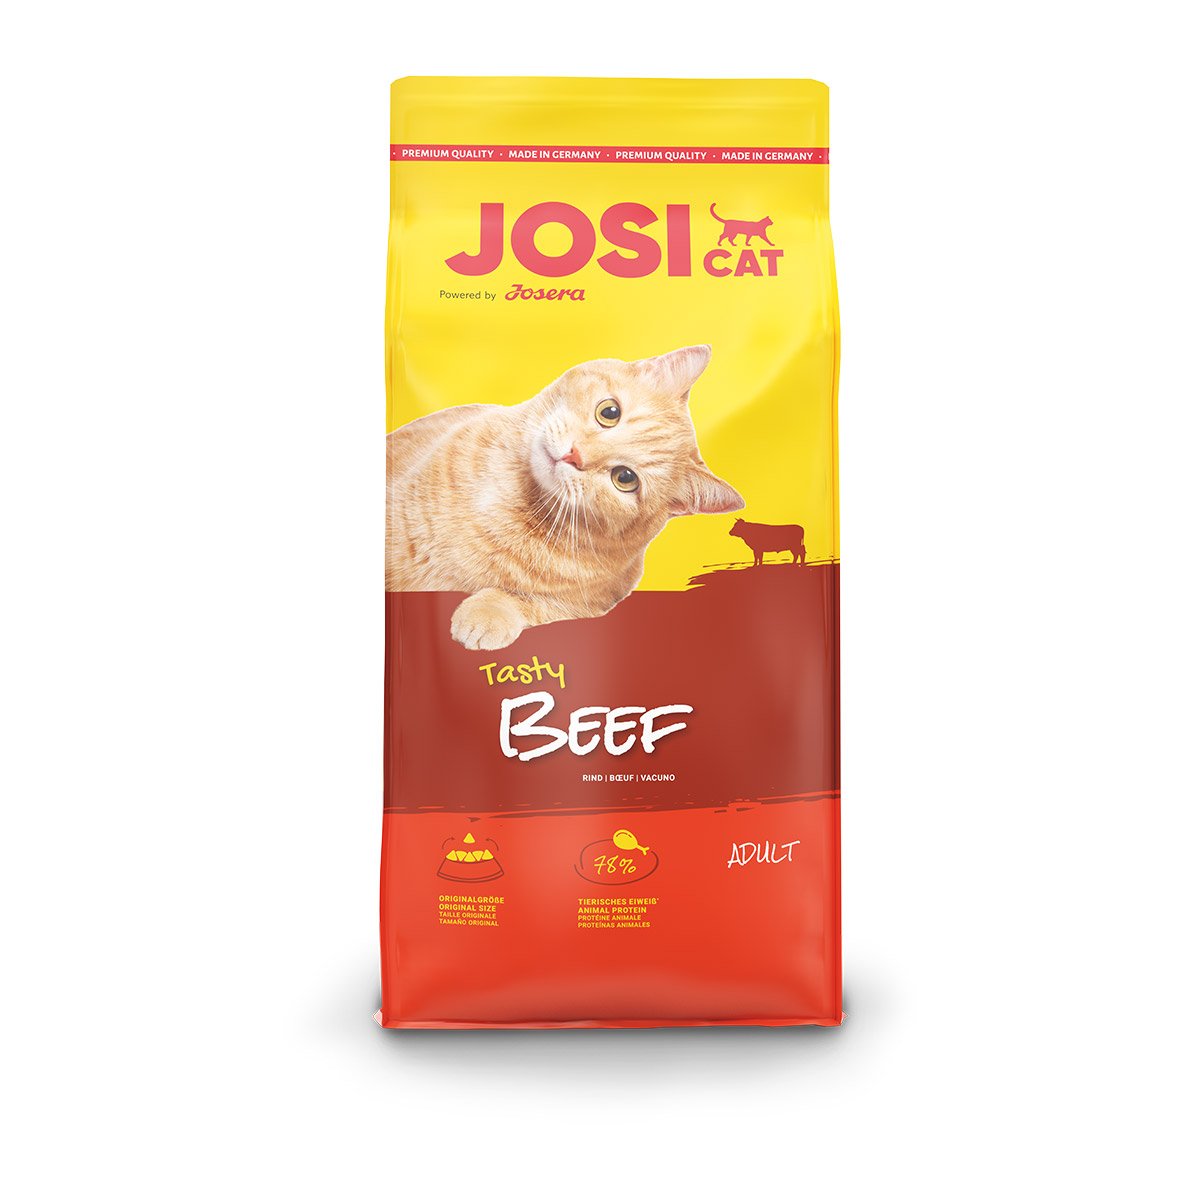 JosiCat Tasty Beef 2x10kg von JosiCat